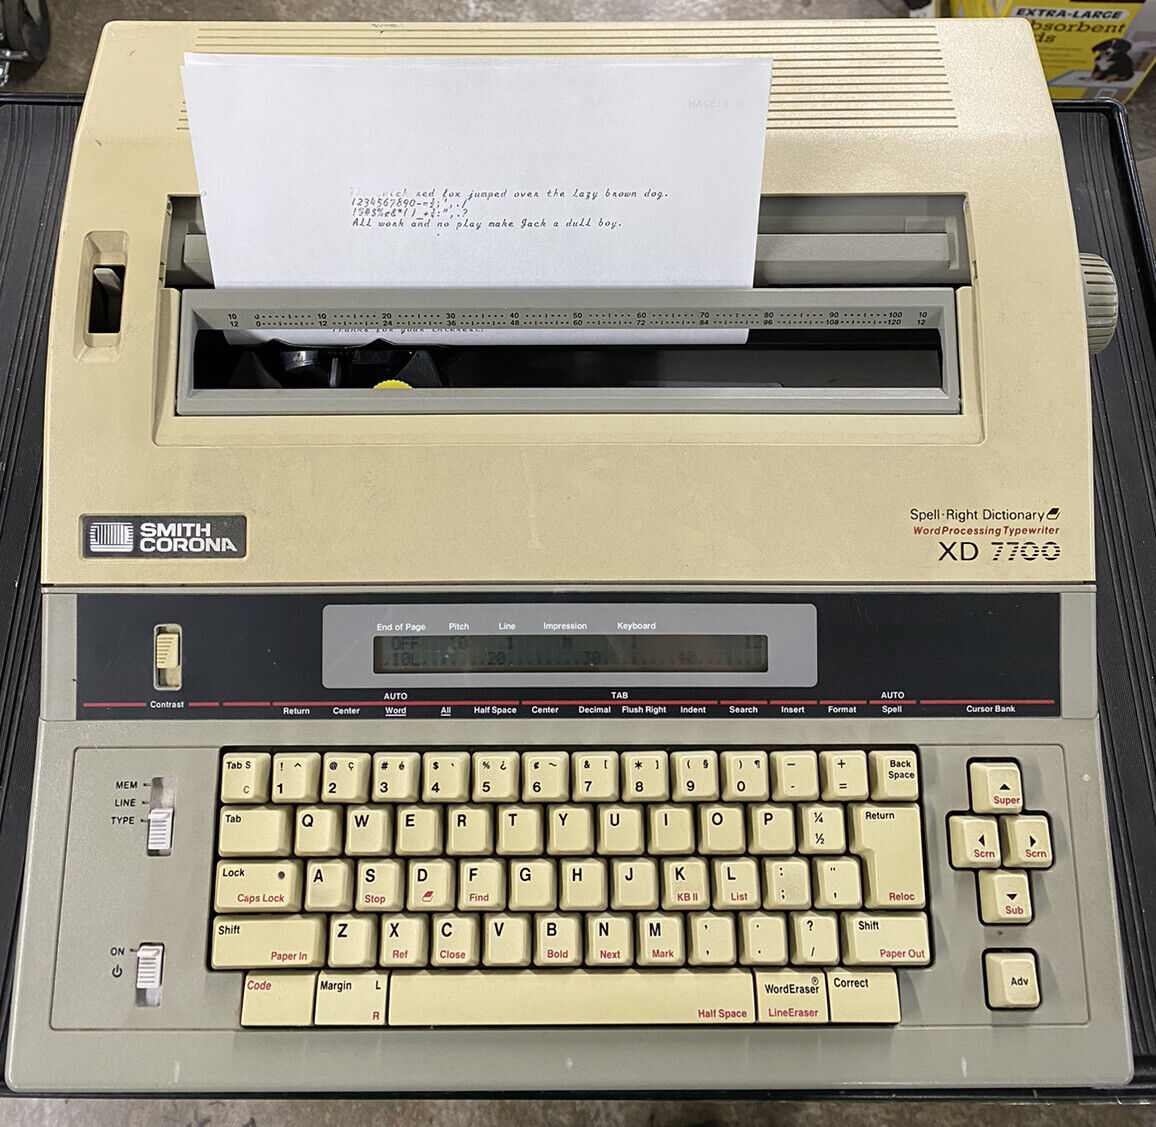 Smith Corona Electric Typewriter XD 7700 Word Processor Dictionary